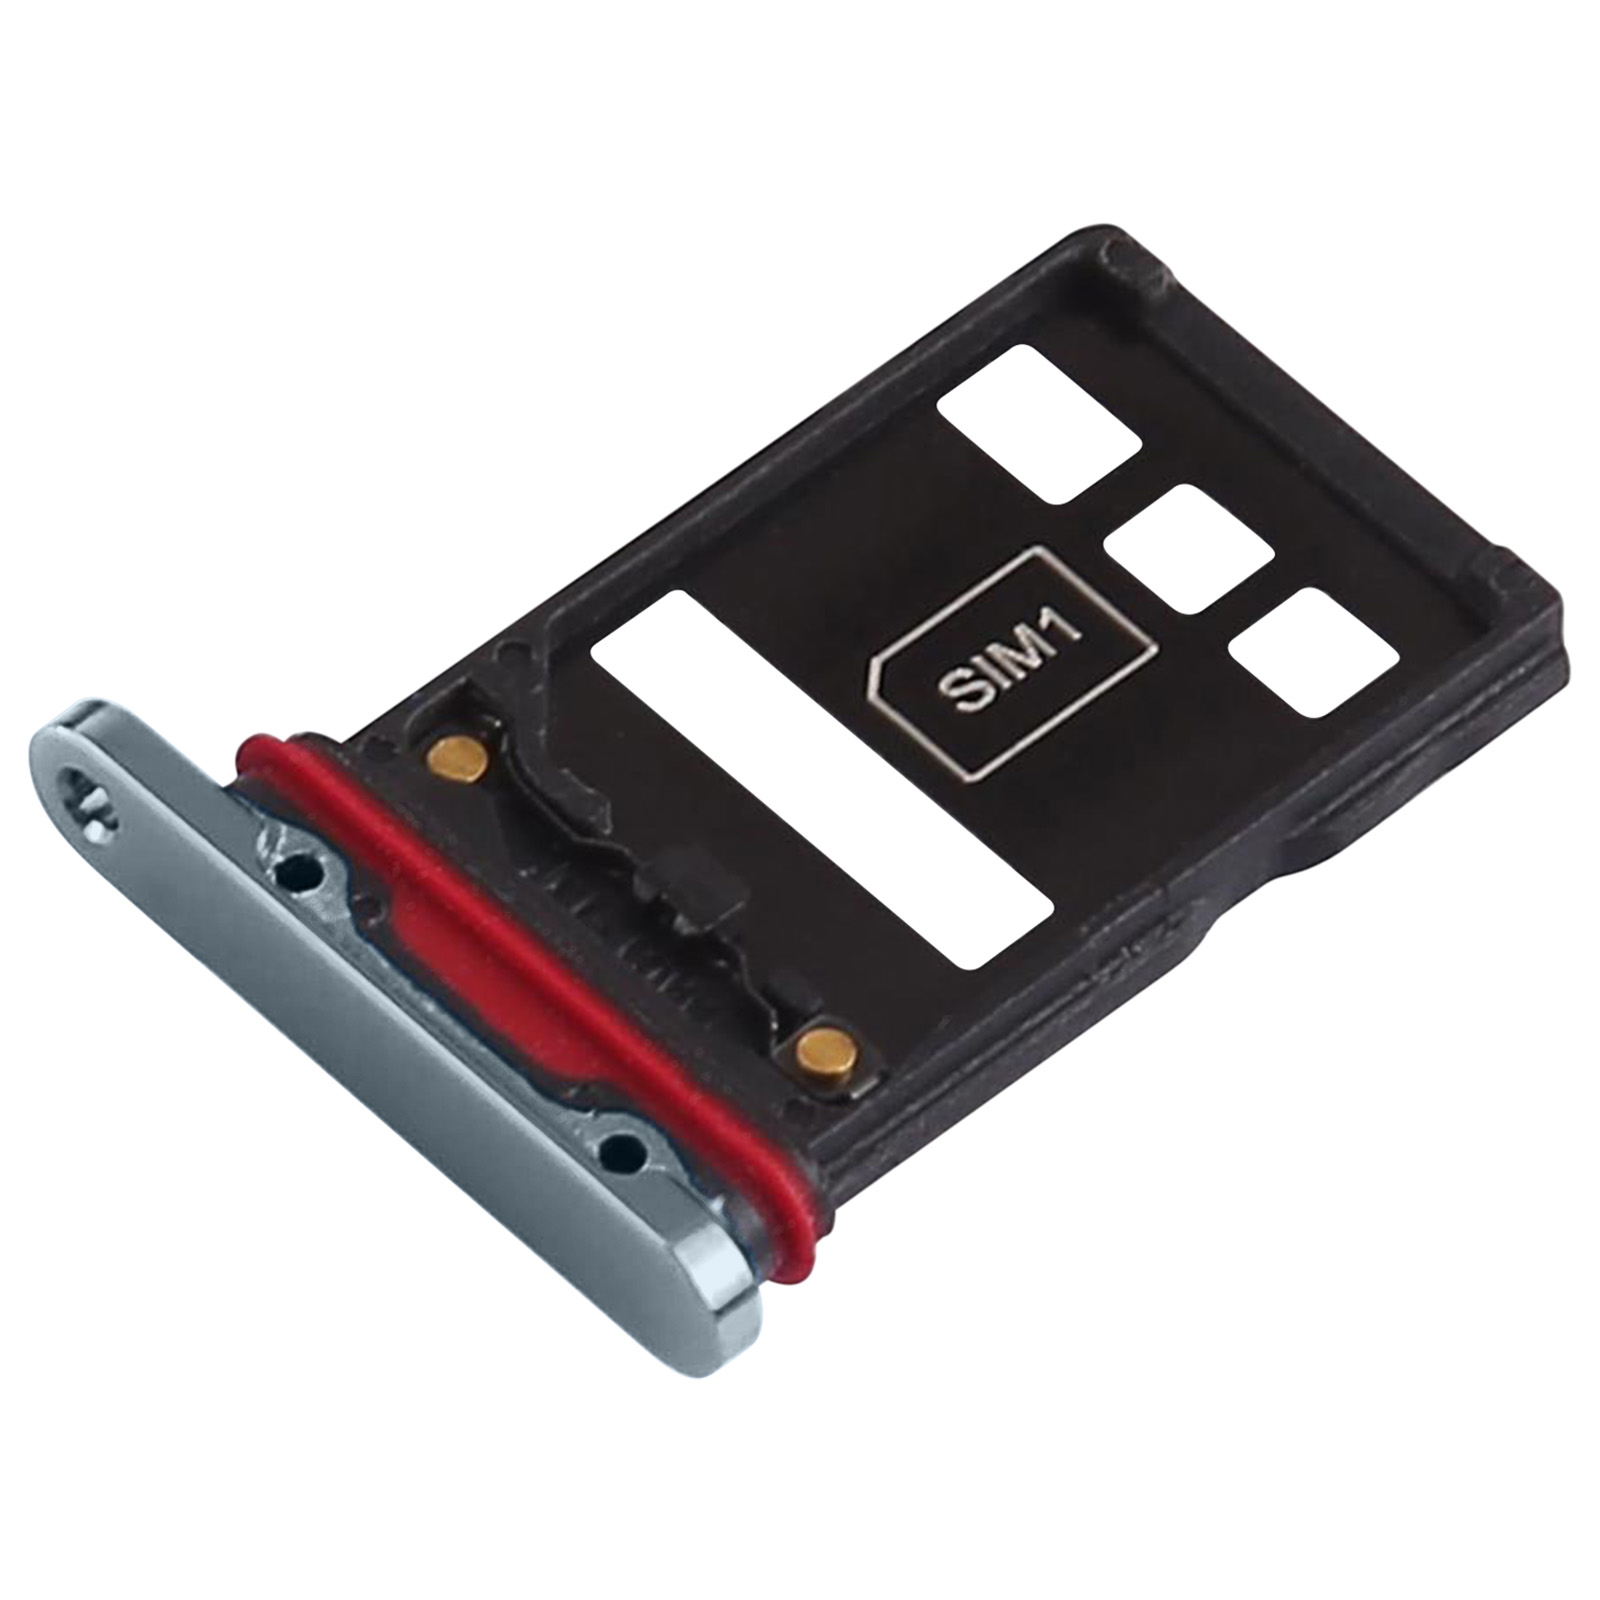 Tiroir adaptateur carte Sim et Nano Memory - Noir p. Huawei P30